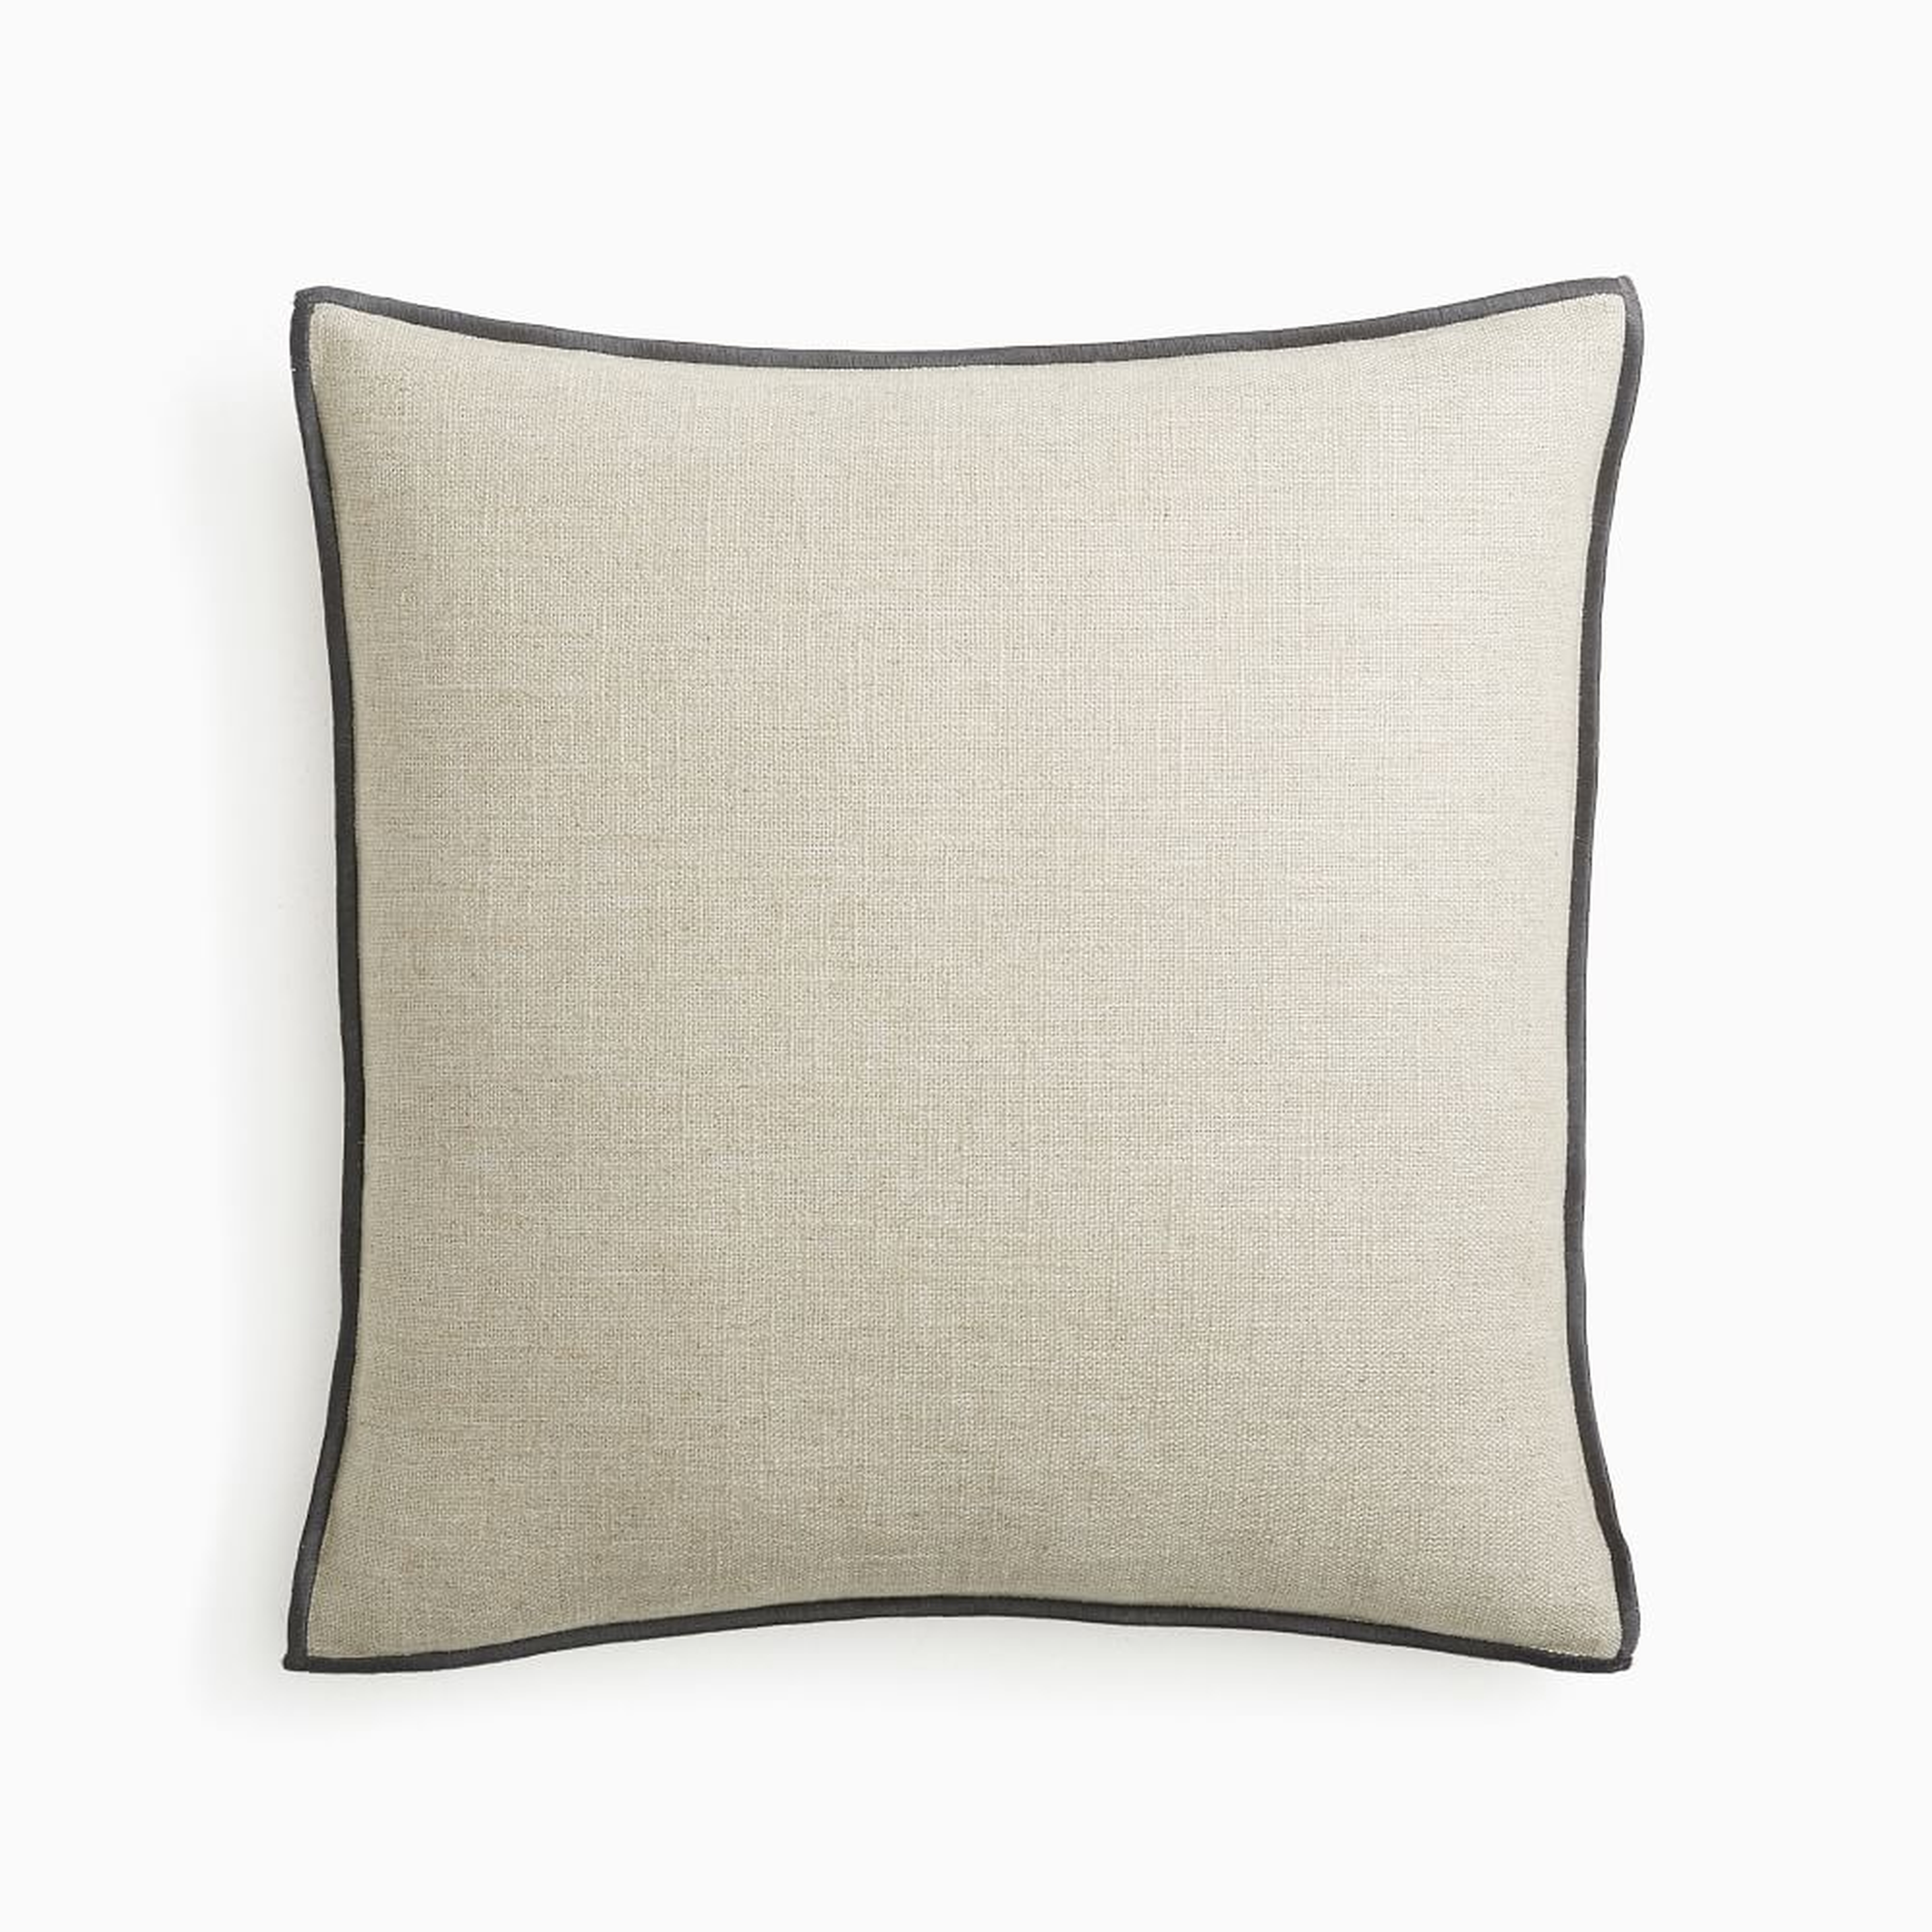 Classic Linen Pillow Cover, 20"x20", Natural - West Elm